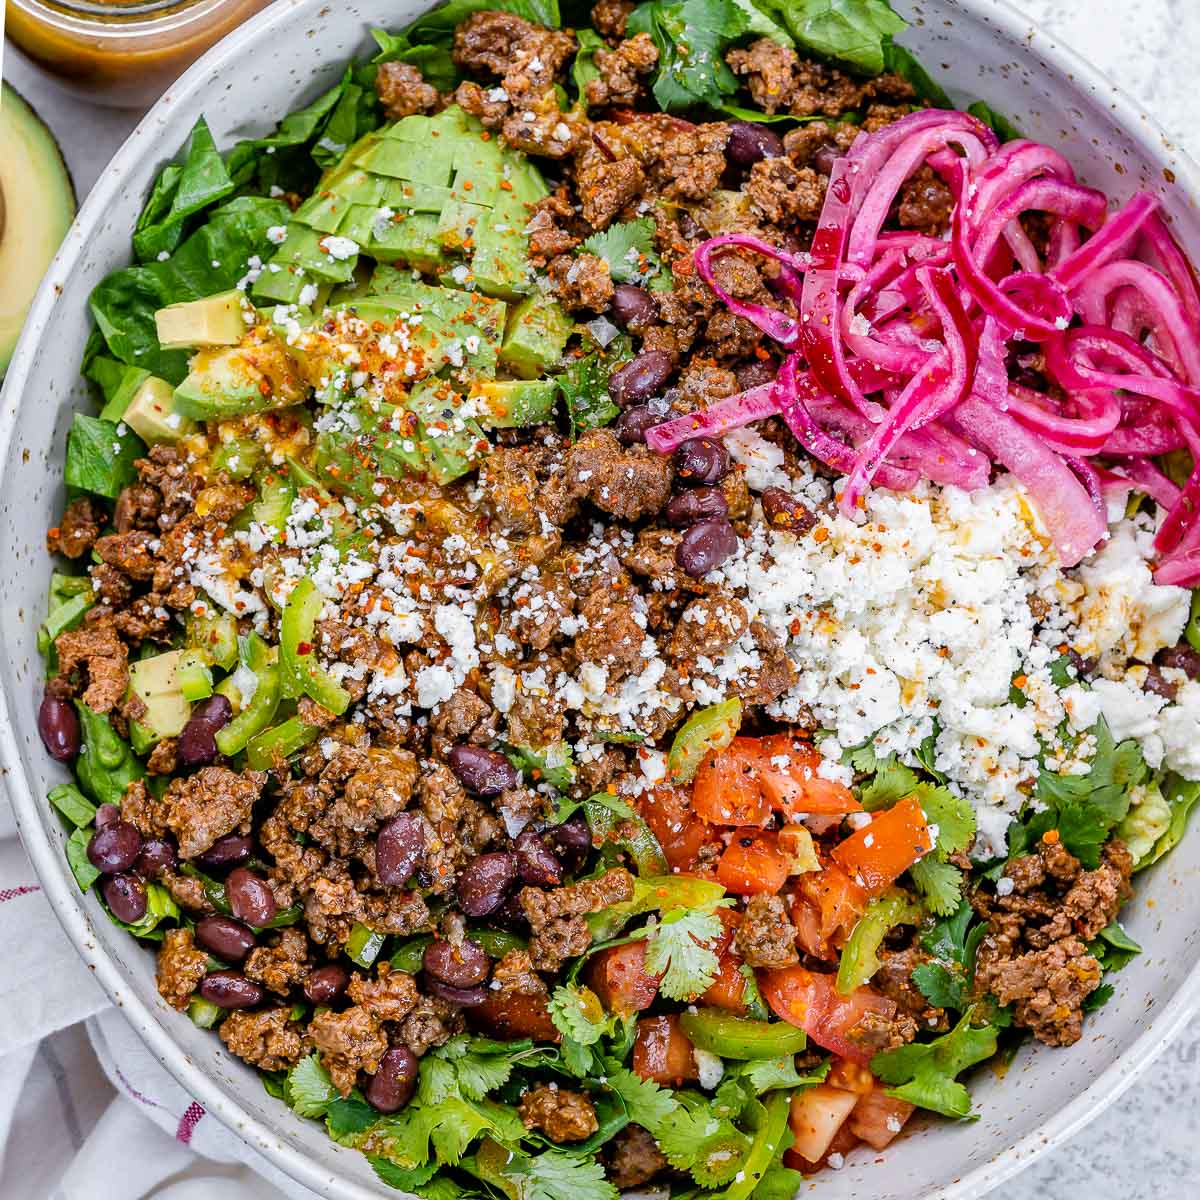 https://cleanfoodcrush.com/wp-content/uploads/2022/05/best-Tex-Mex-Salad-Bowls-recipe.jpg